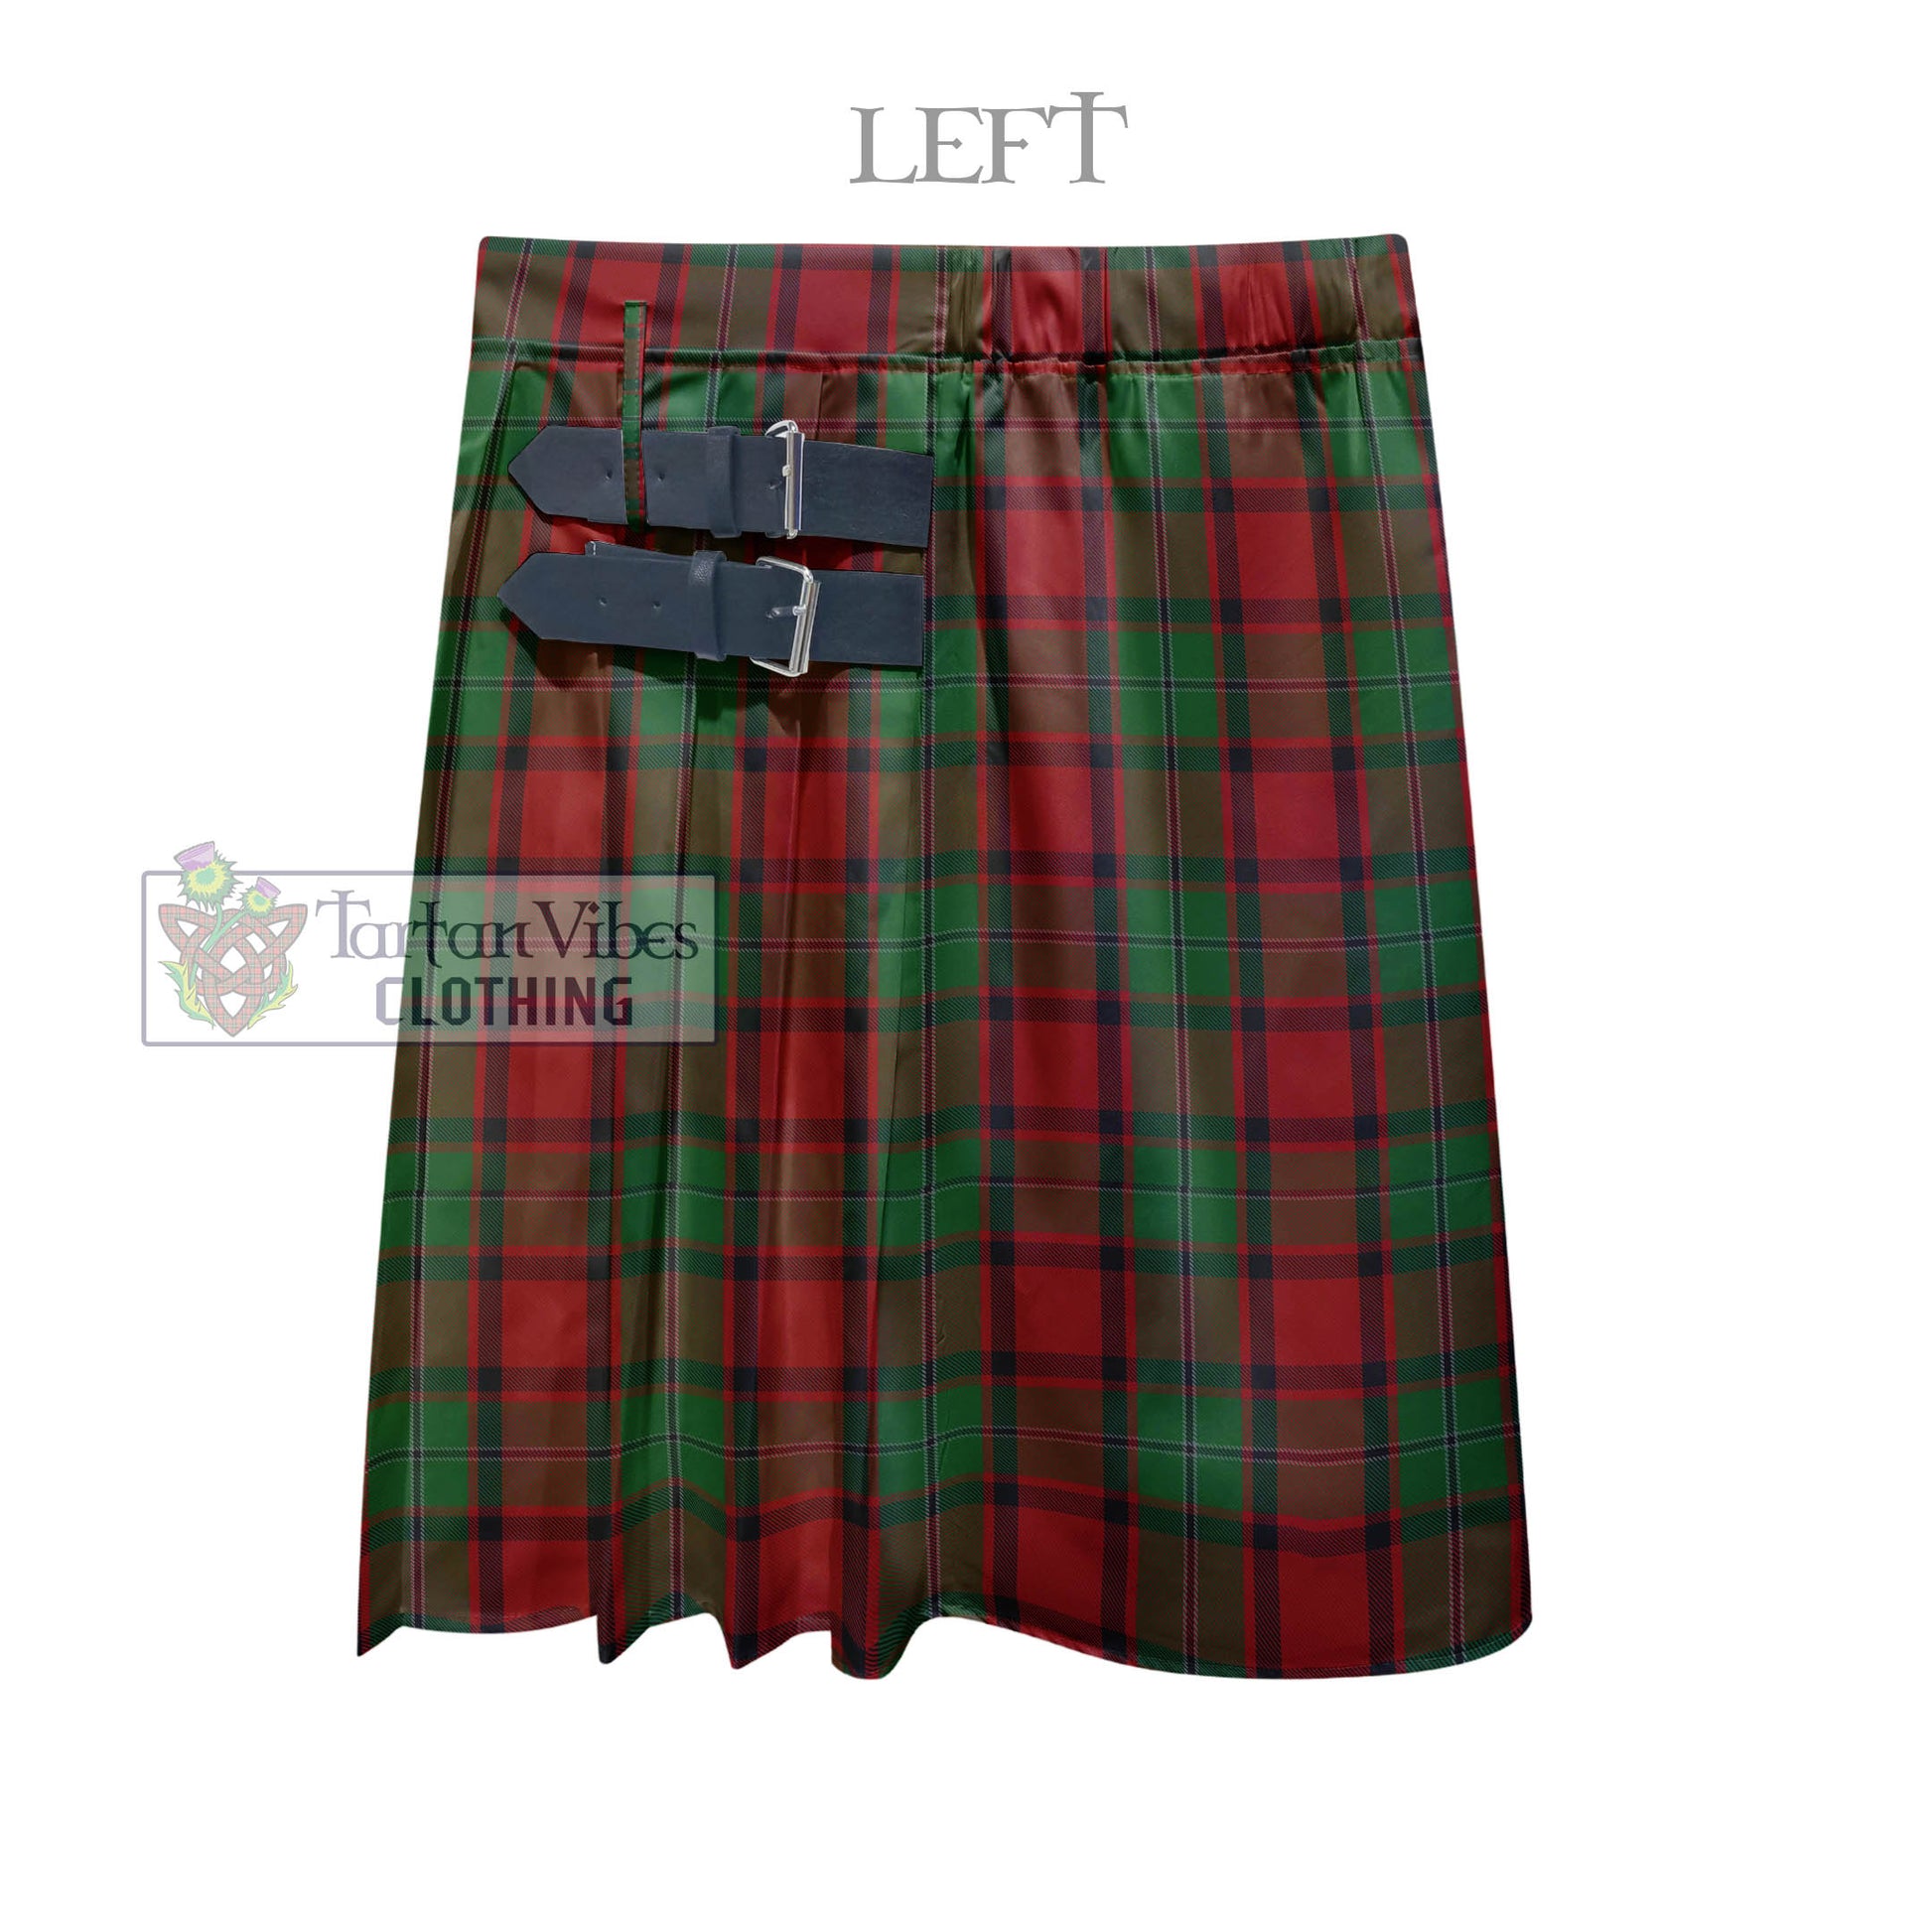 Tartan Vibes Clothing MacPhail Tartan Men's Pleated Skirt - Fashion Casual Retro Scottish Style